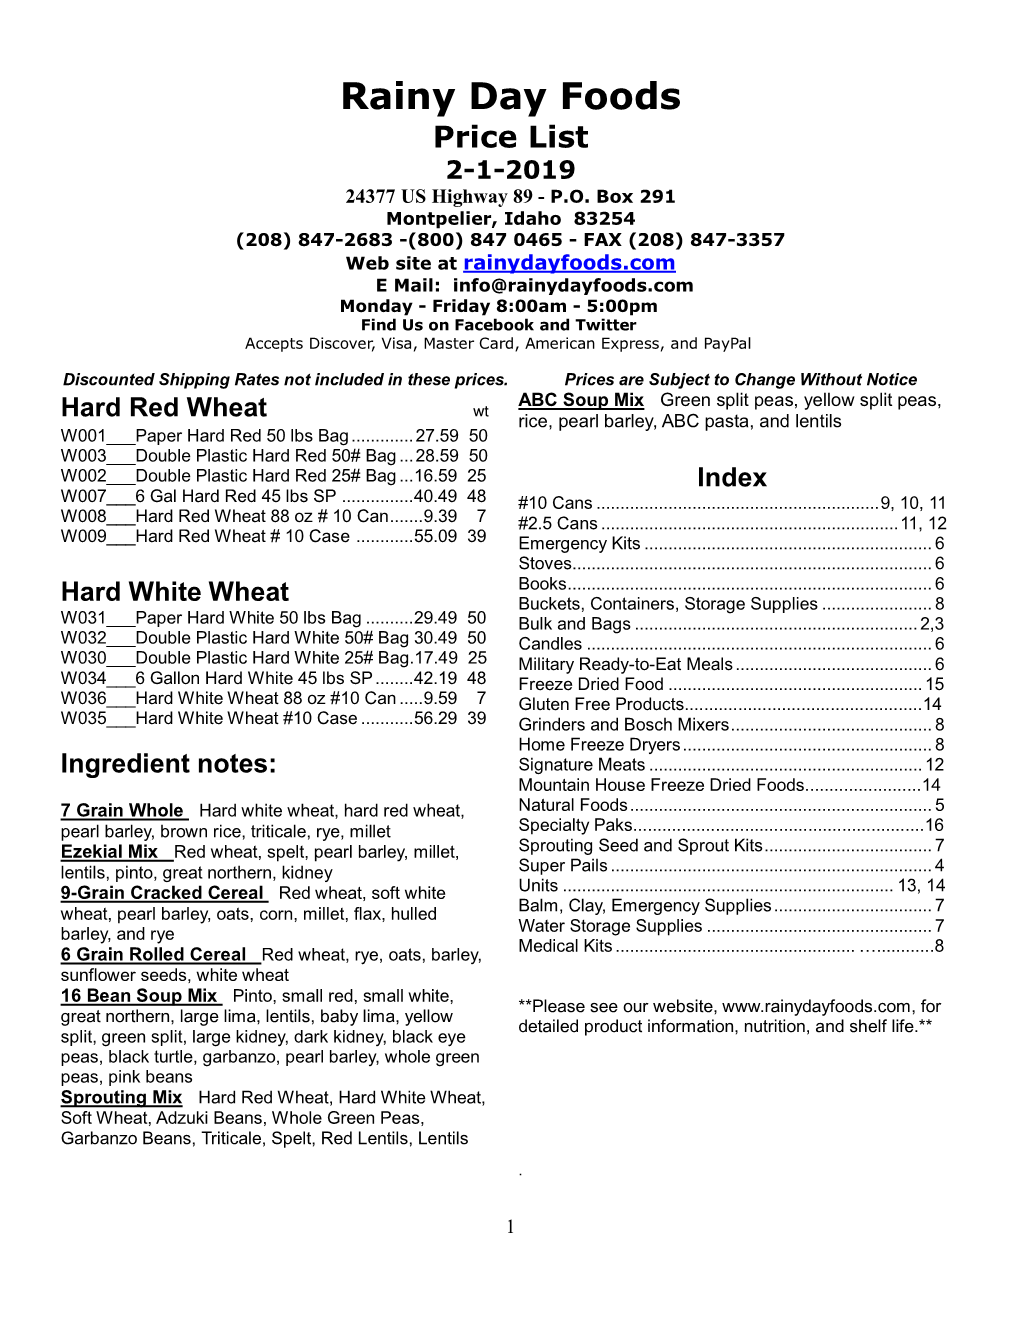 Rainy Day Foods Price List 2-1-2019 24377 US Highway 89 - P.O